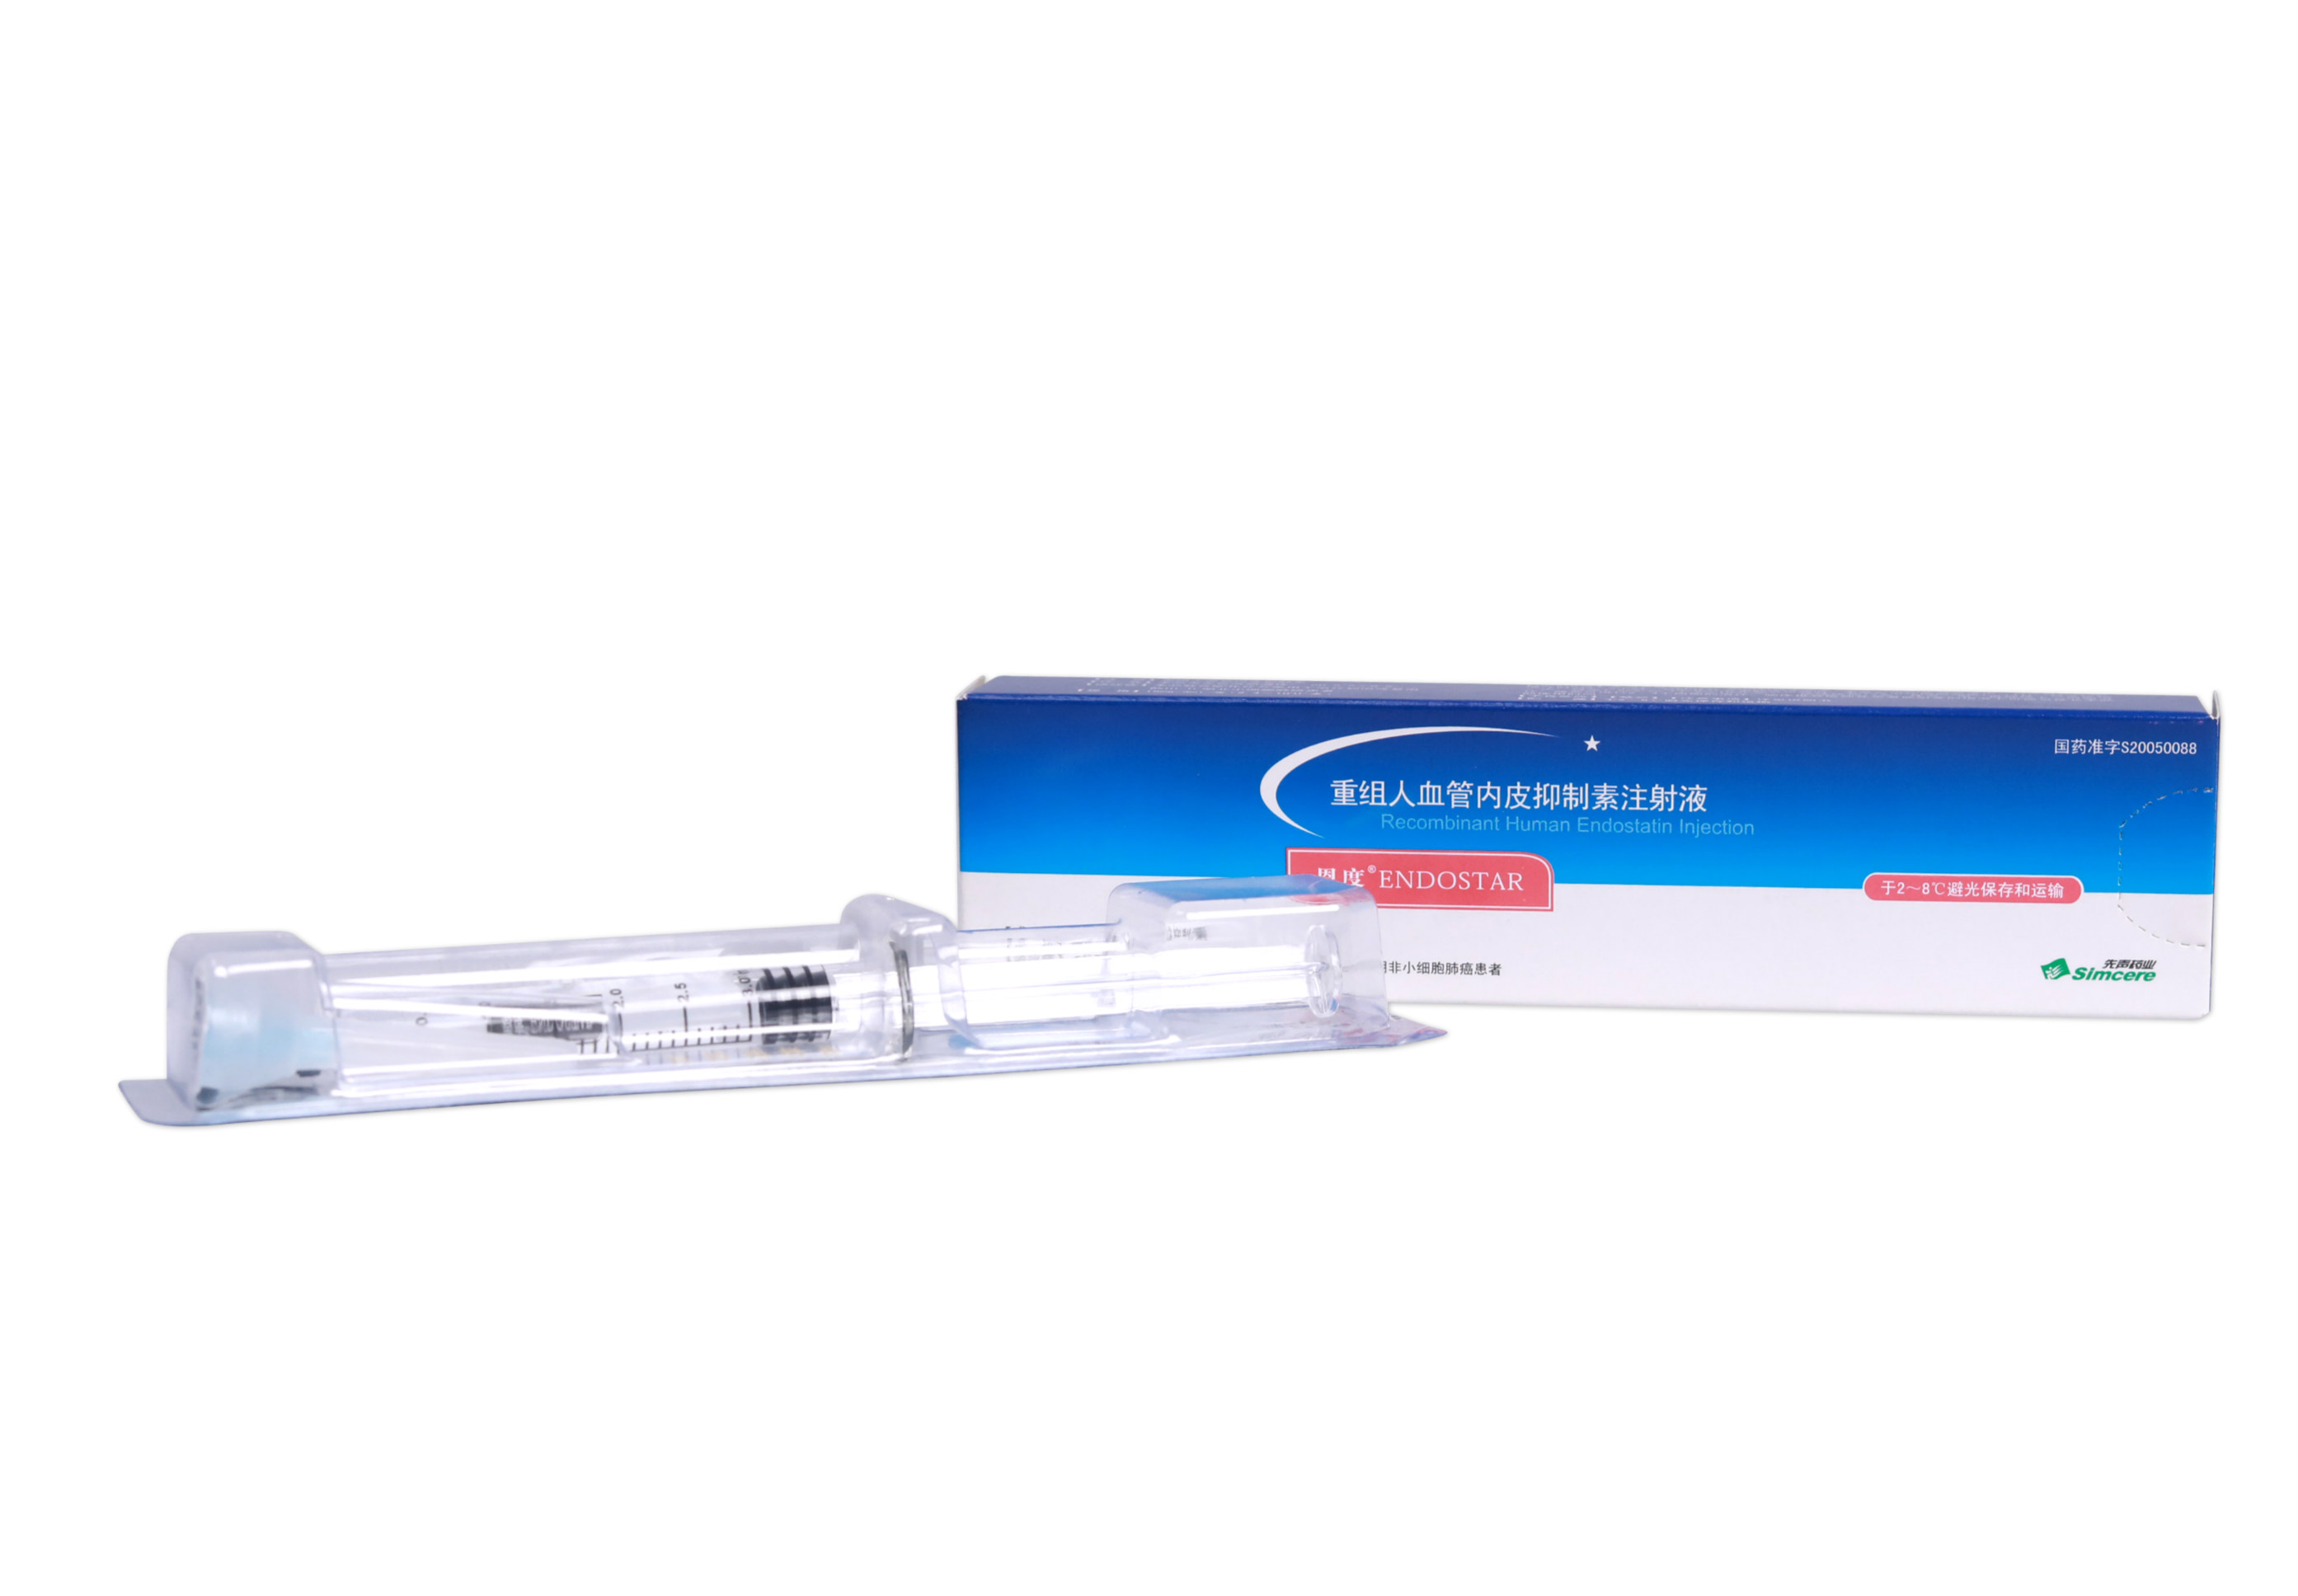 Endostar®：Recombinant Human Endostatin Injection